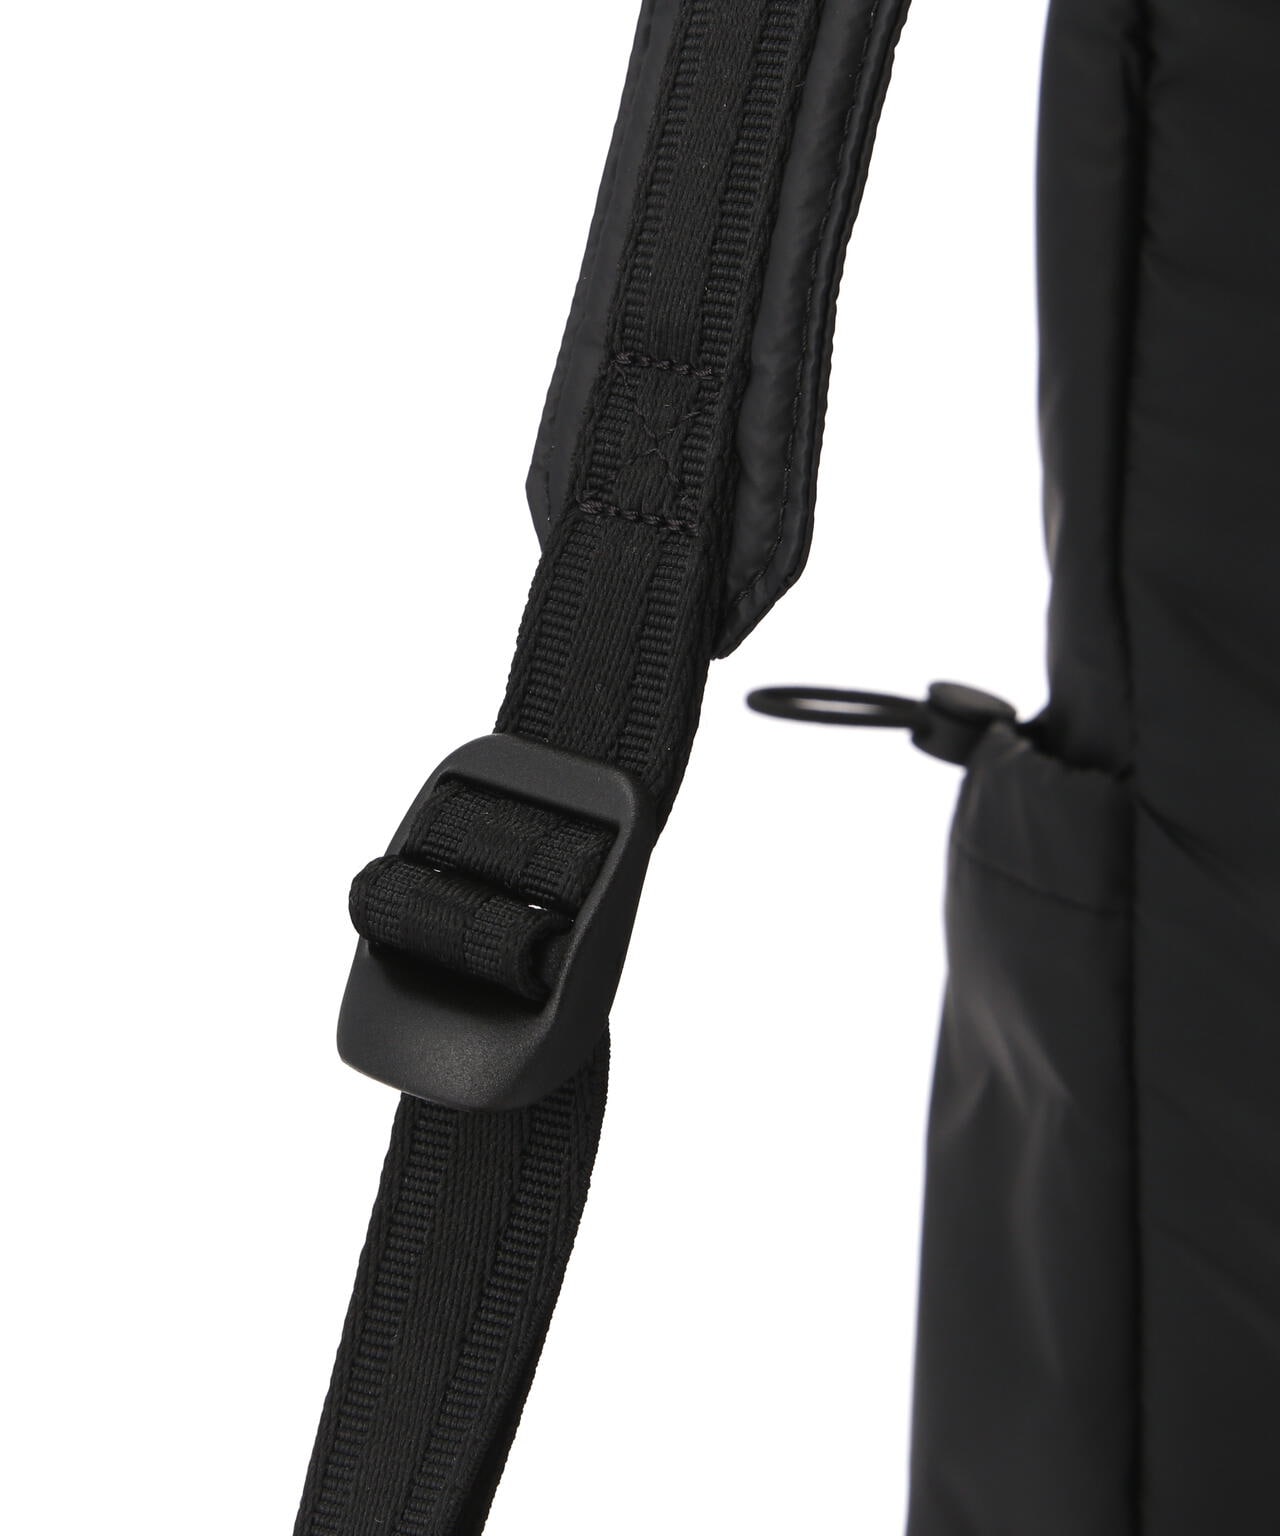 HUNTER(ハンター) intrepid puffer large backpack/バックパック | B